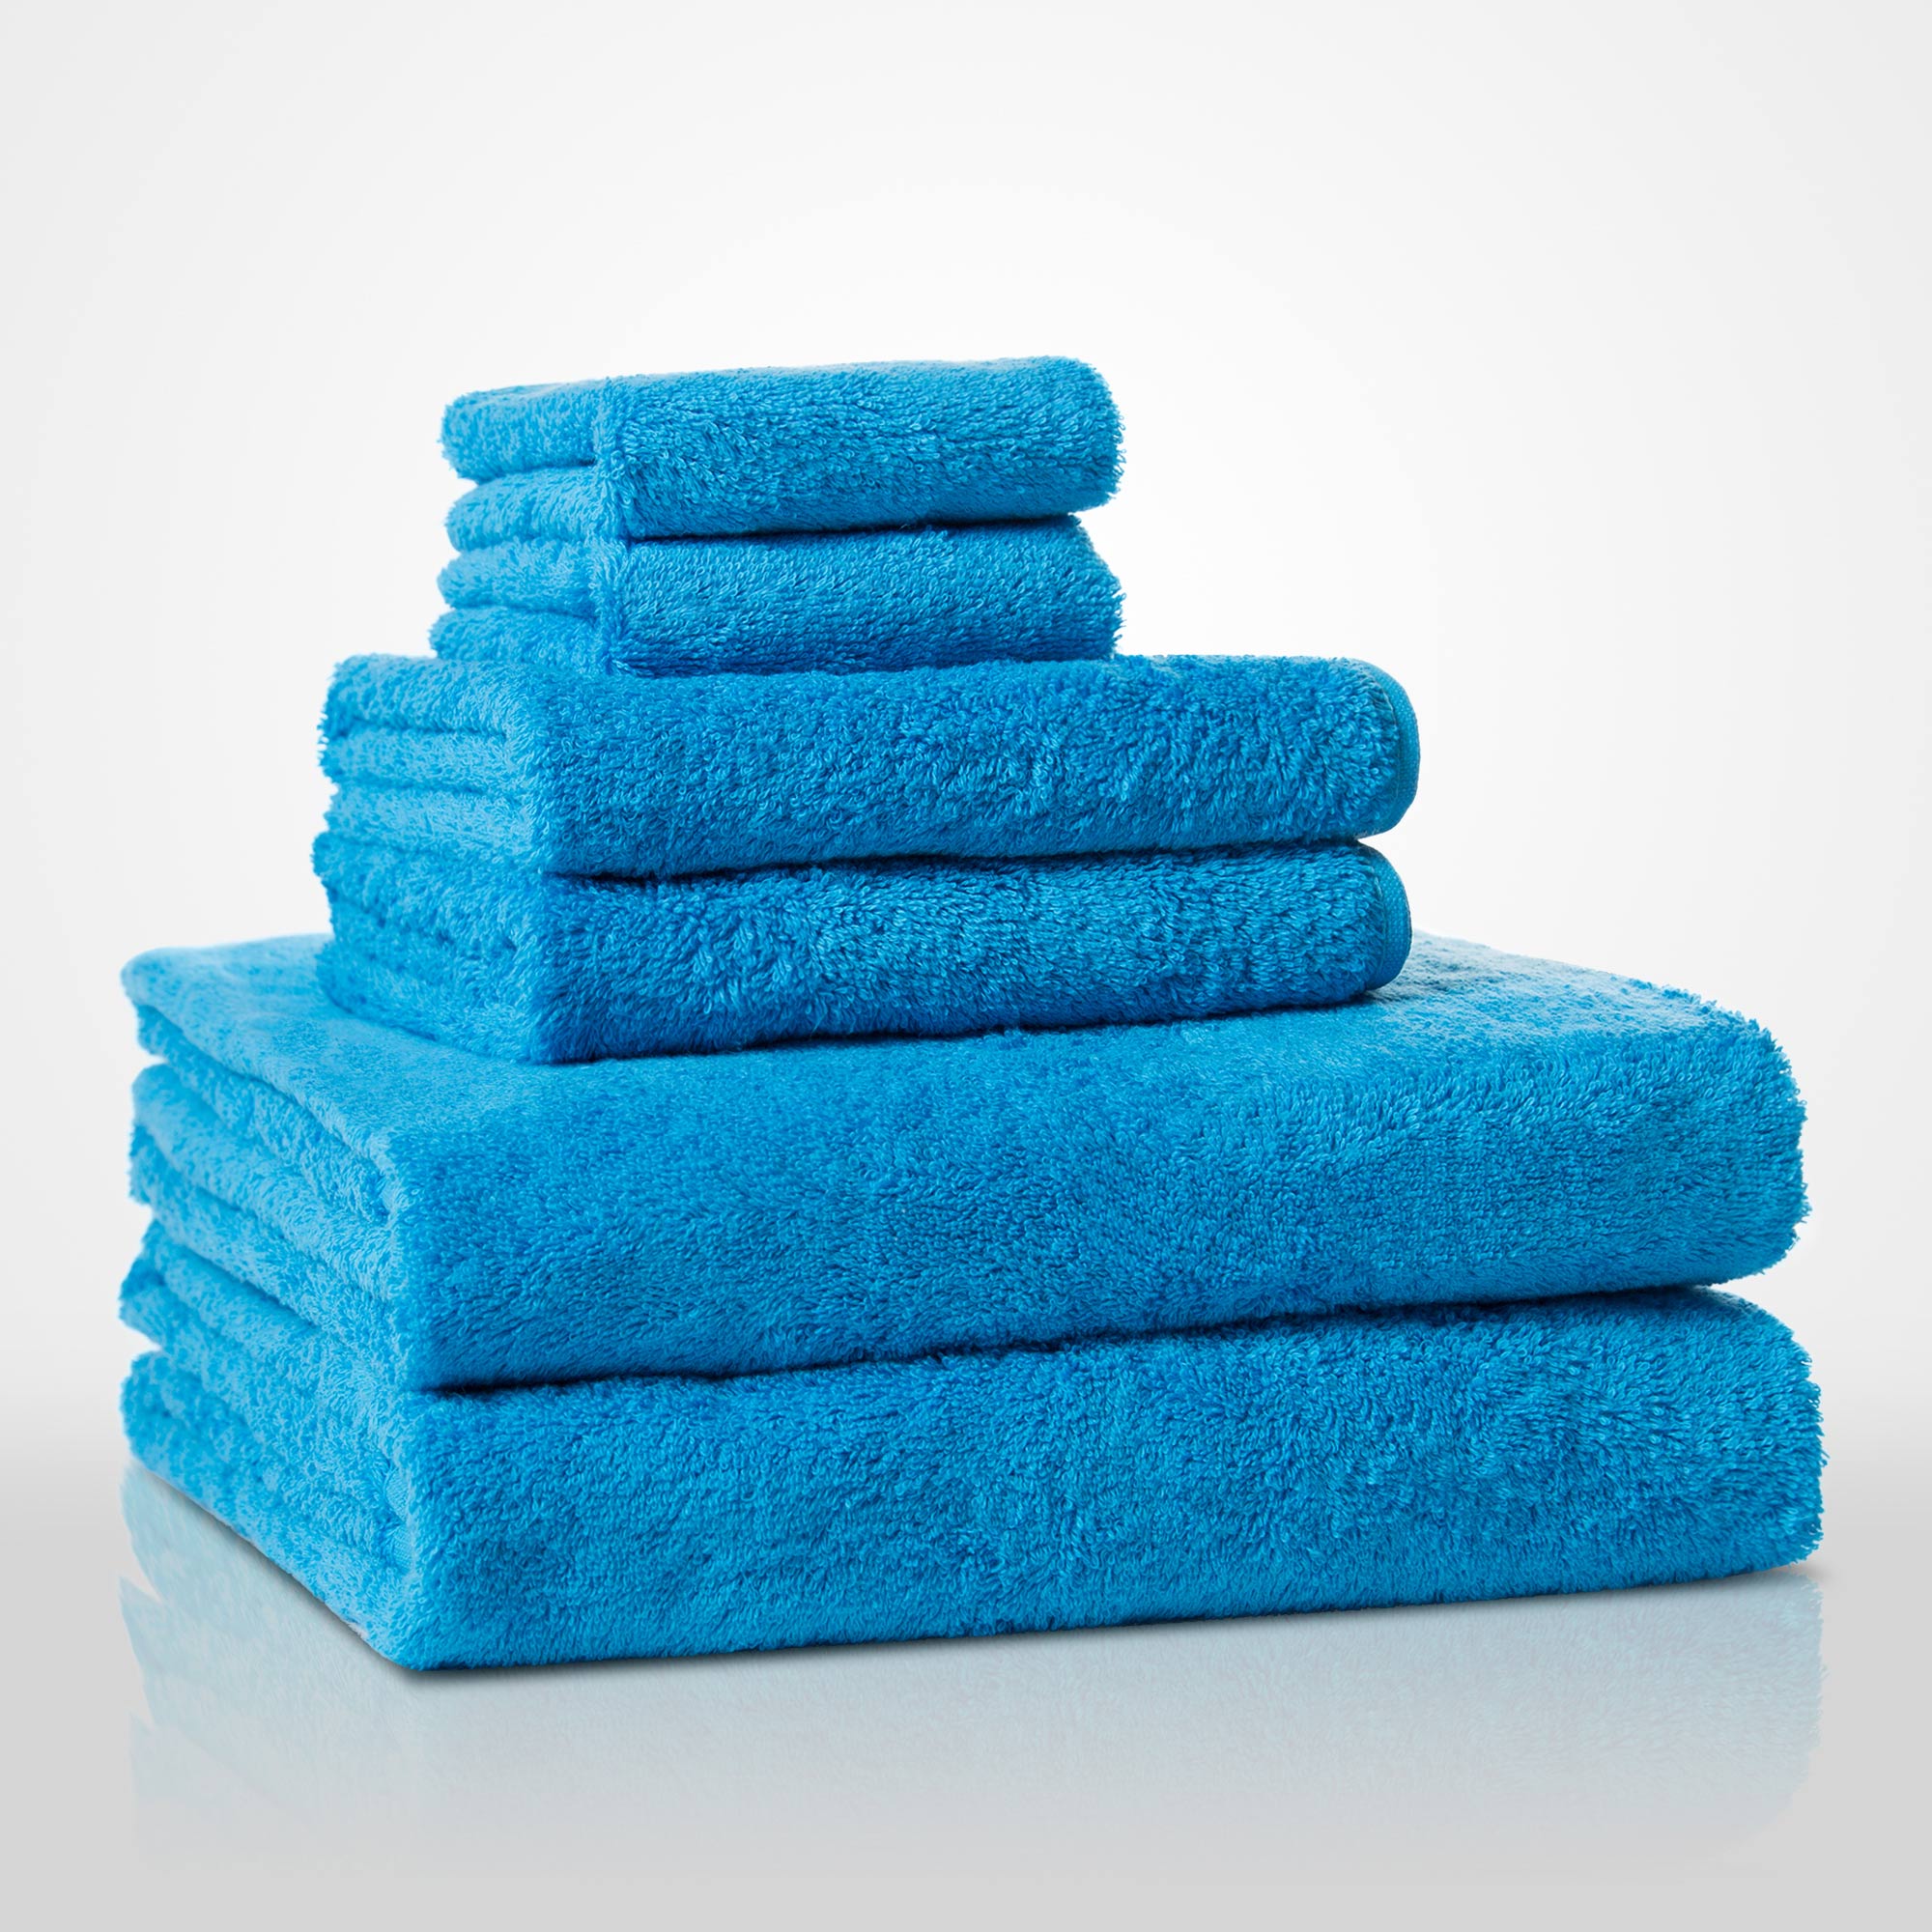 16" x 29" - 100% Turkish Cotton Turquoise Terry Hand Towel-Robemart.com